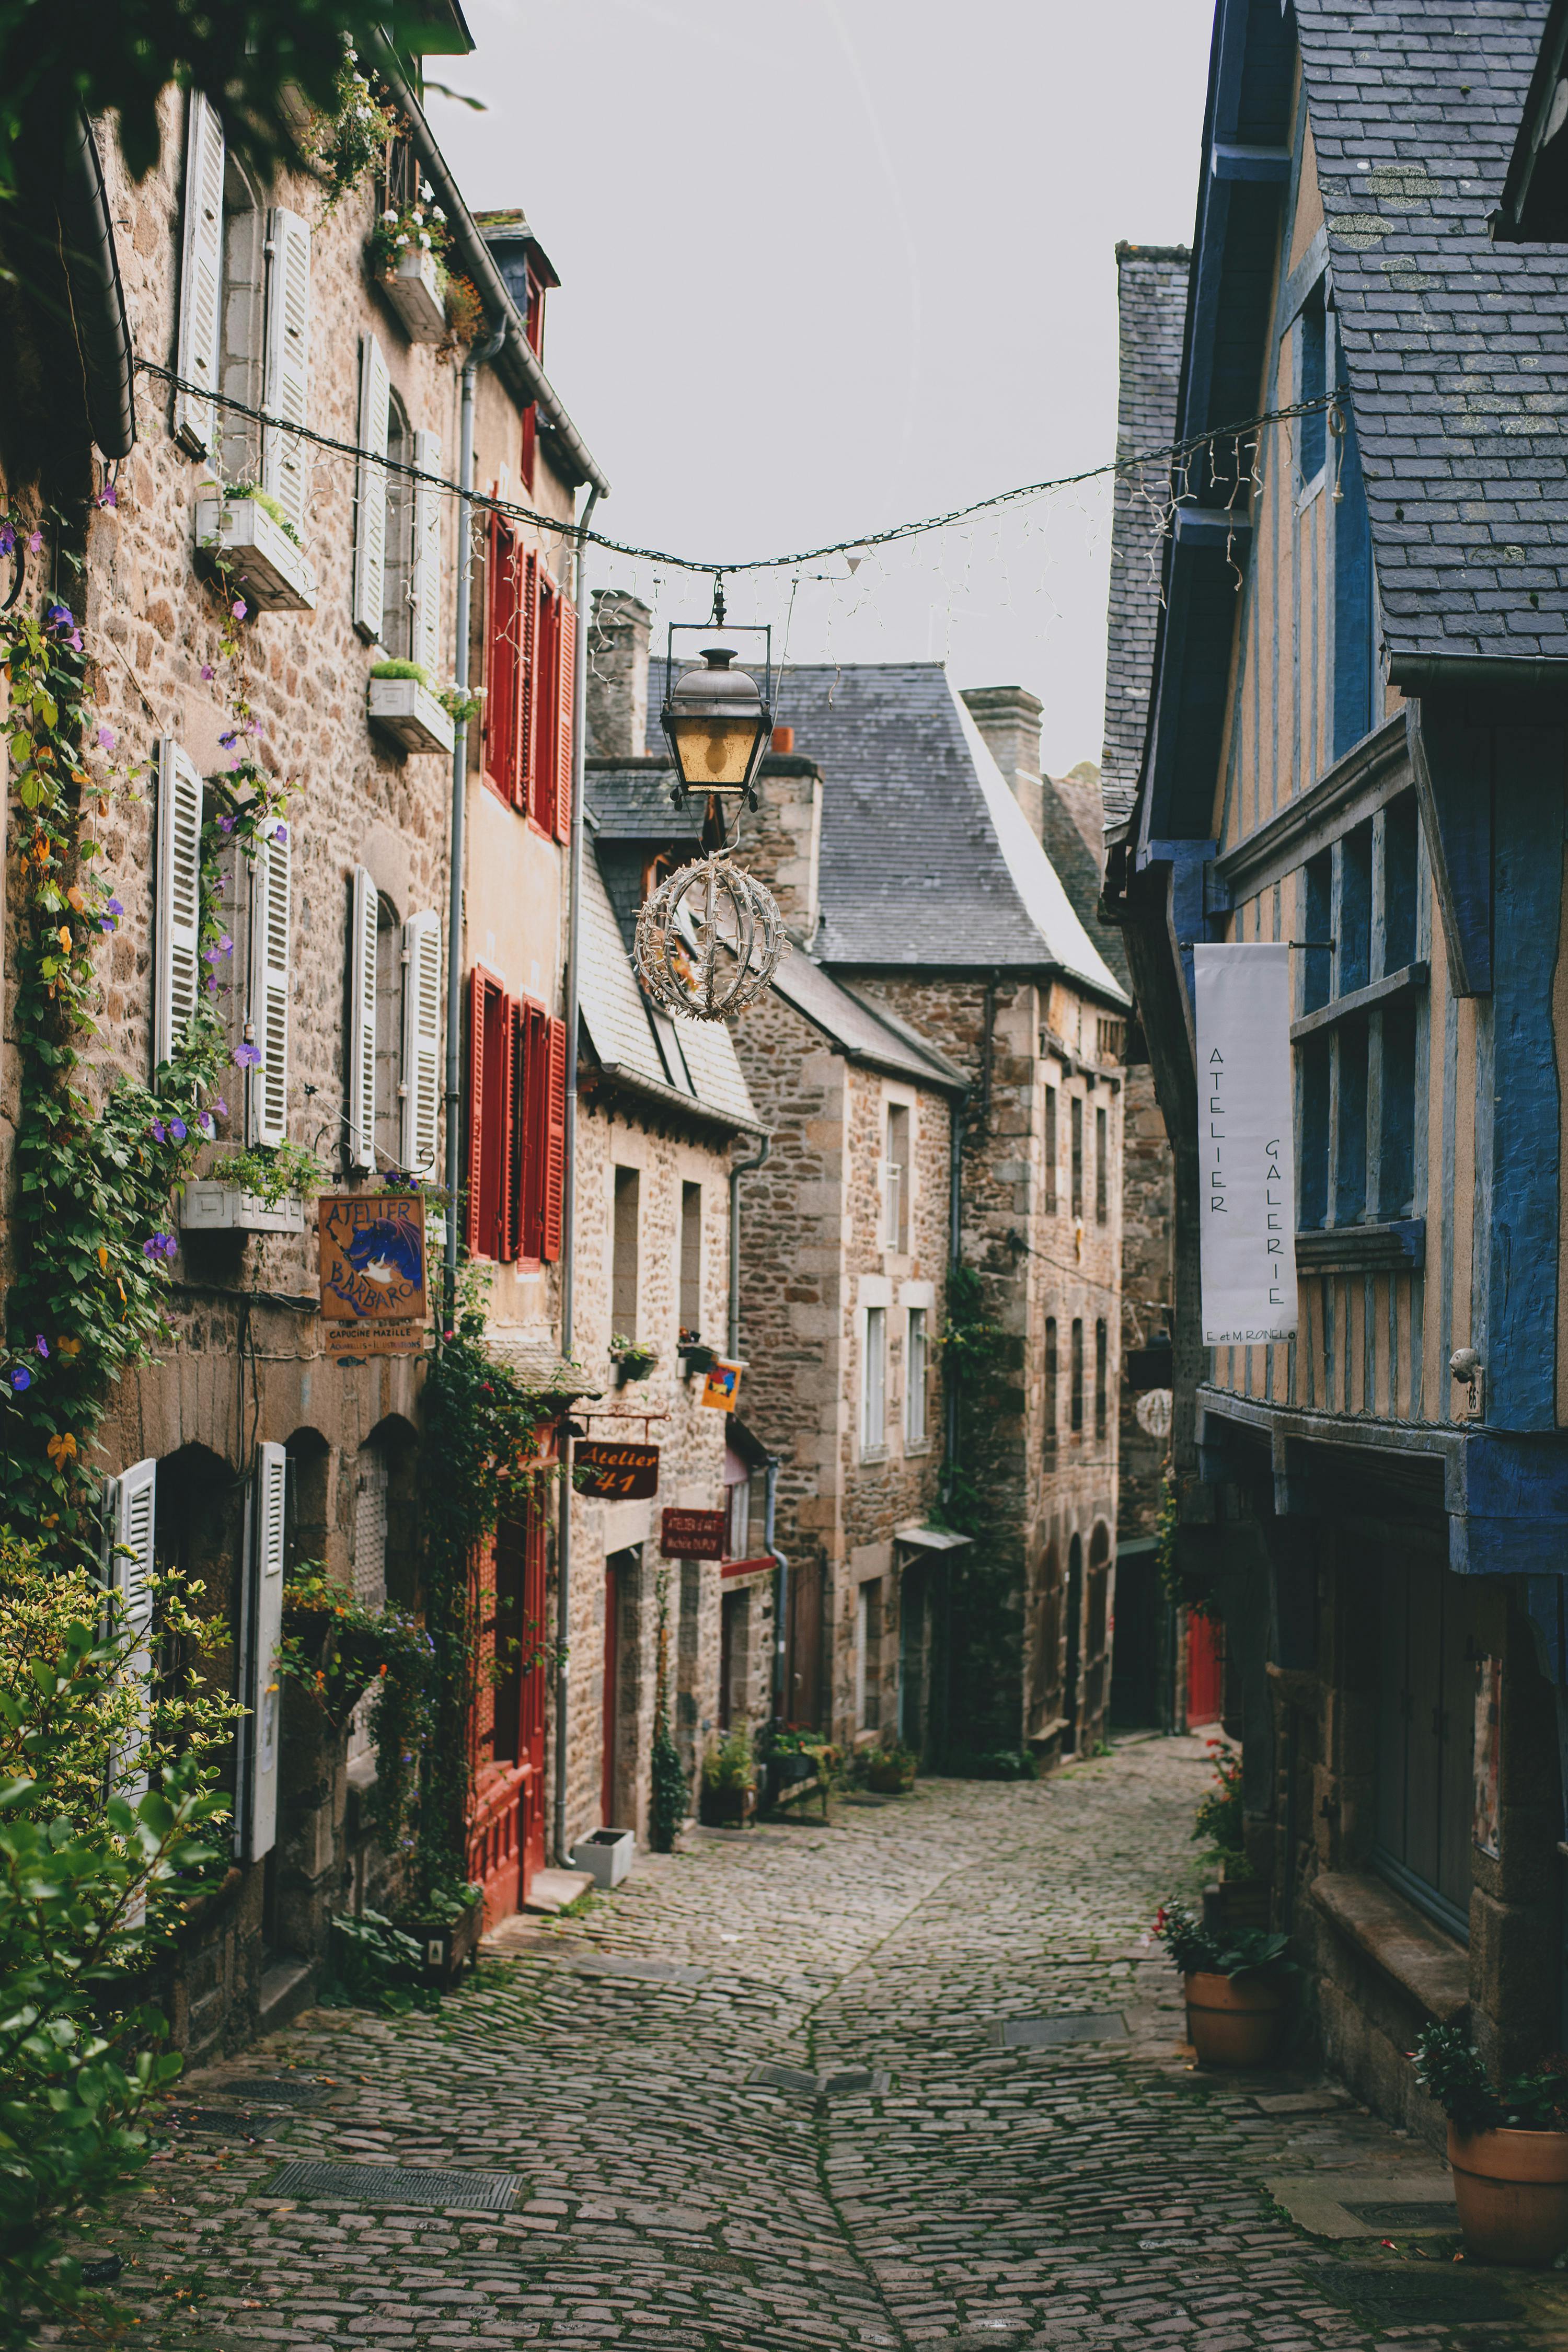 A cobblestone street in a small village | Source: Pexels